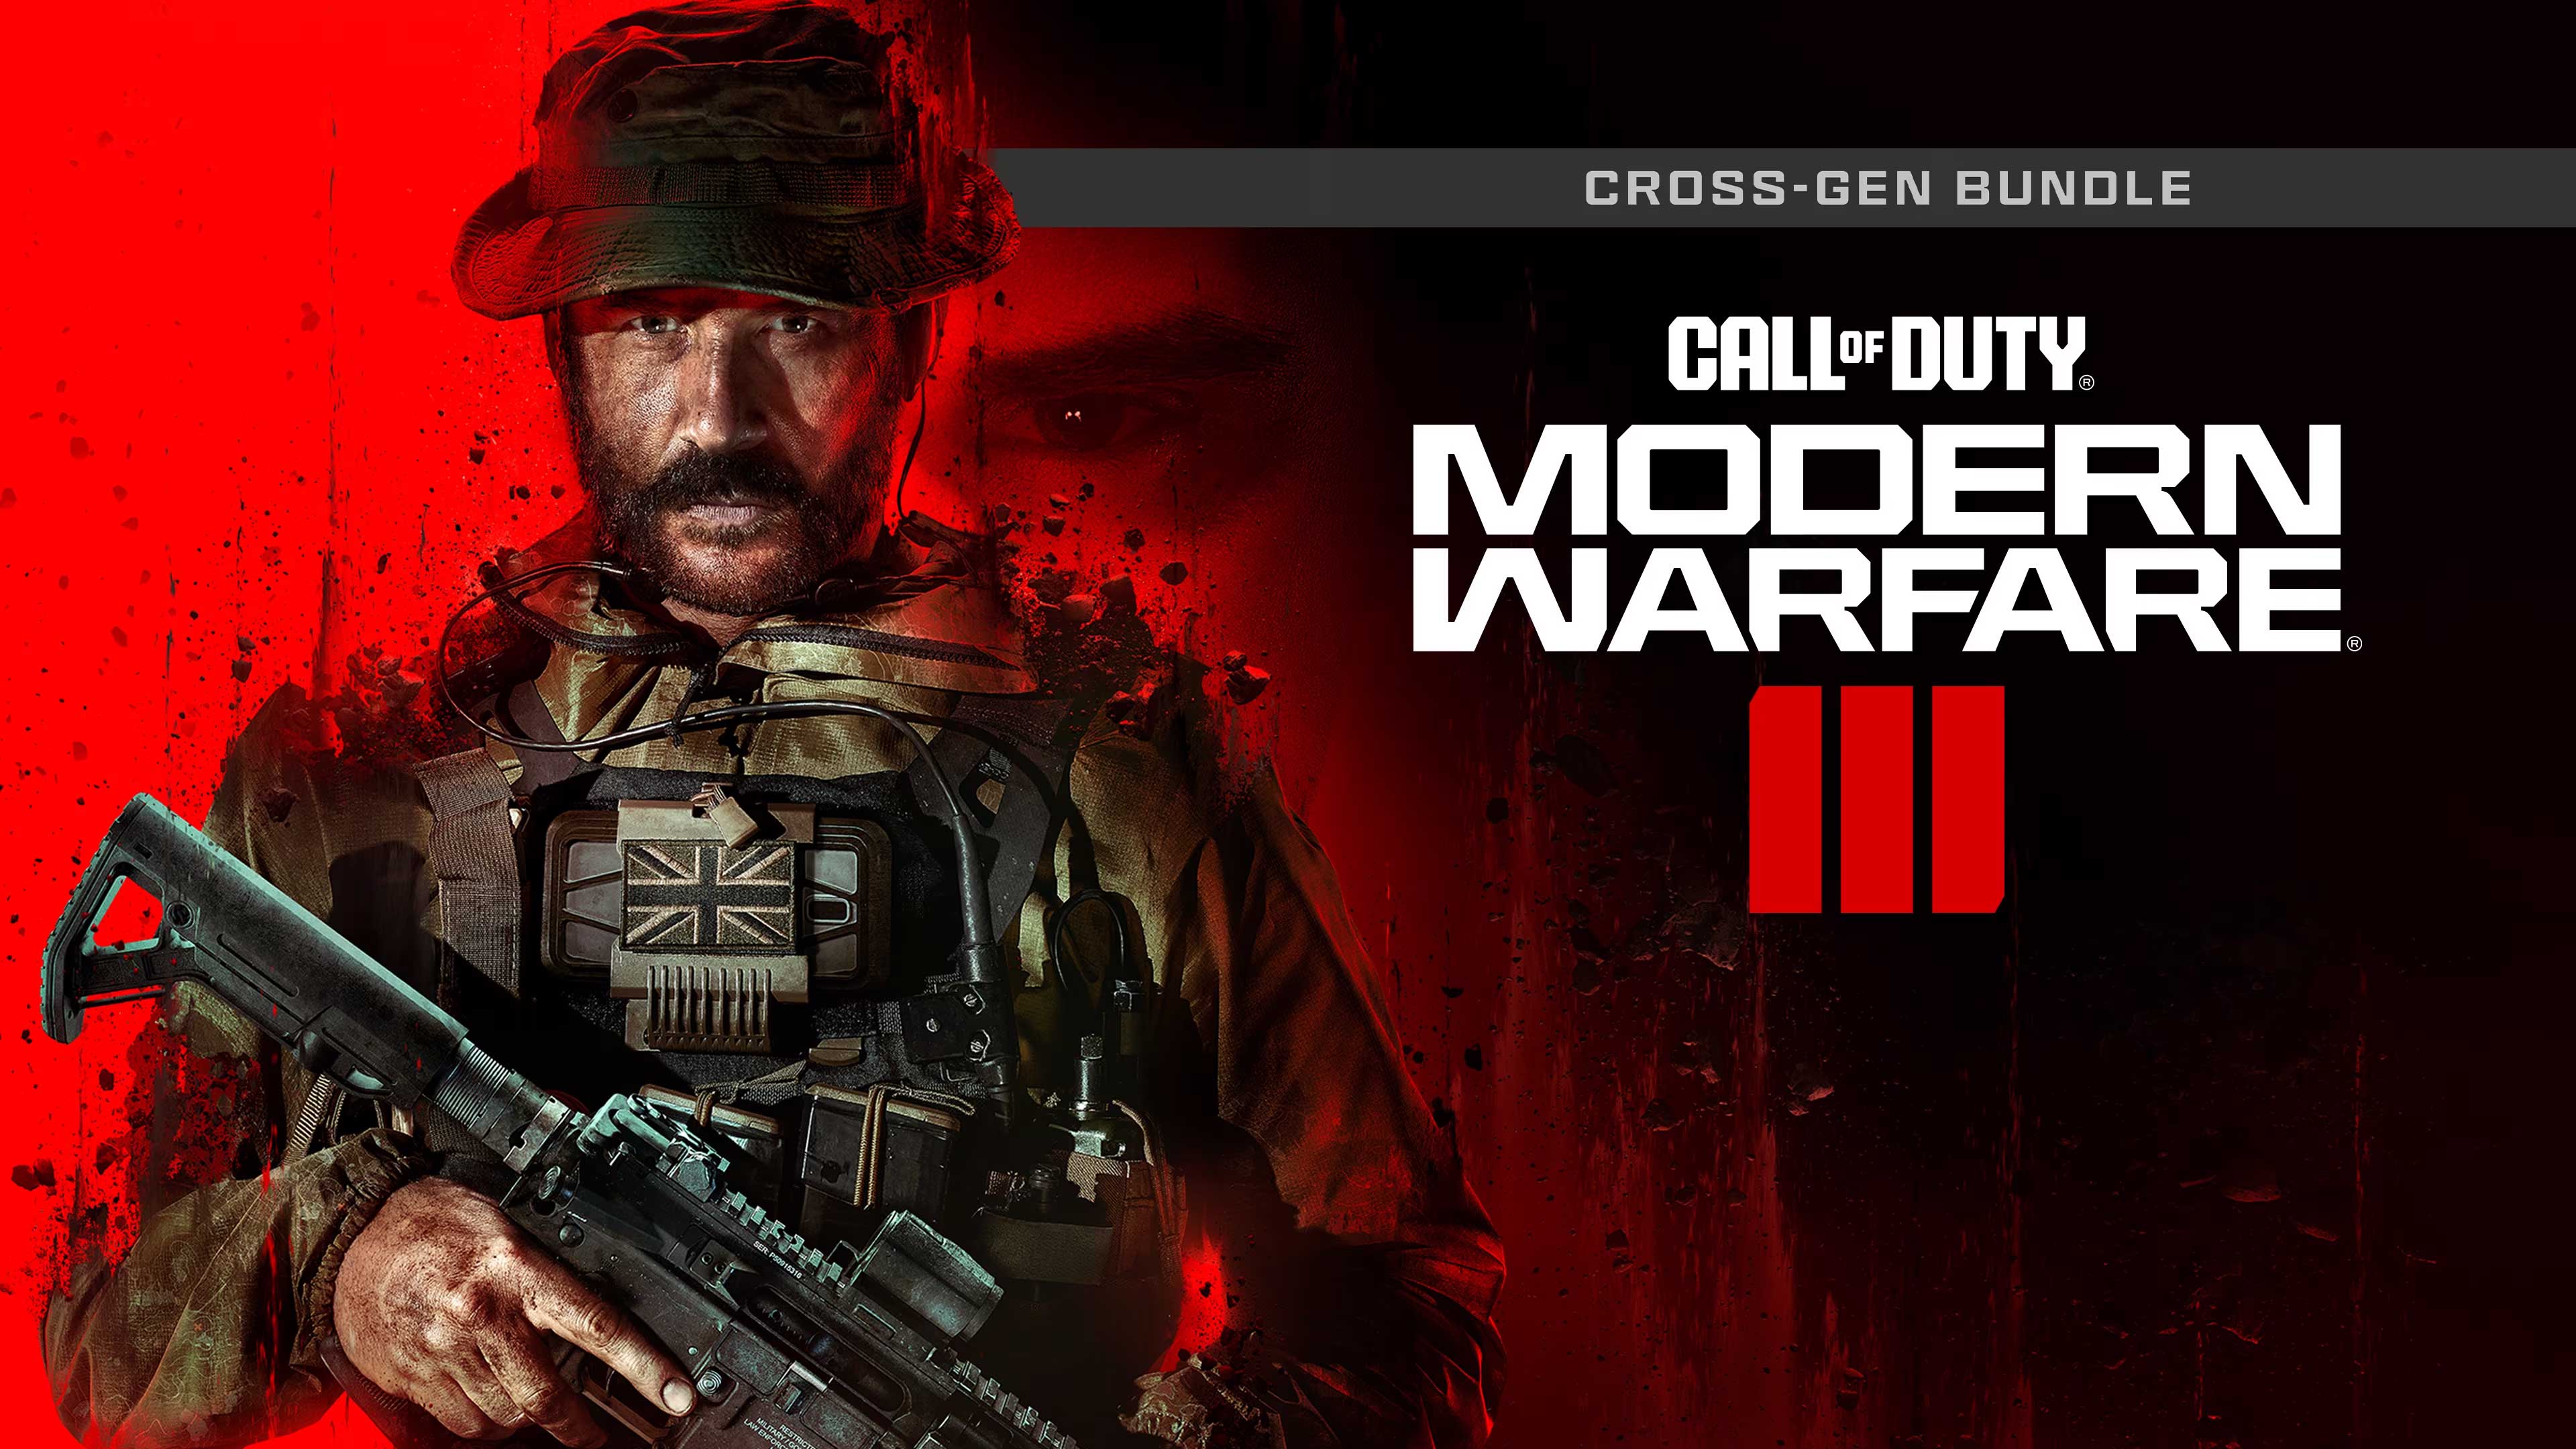 Call of Duty: Modern Warfare III - Cross-Gen Bundle, Game Angeles, gameangeles.com